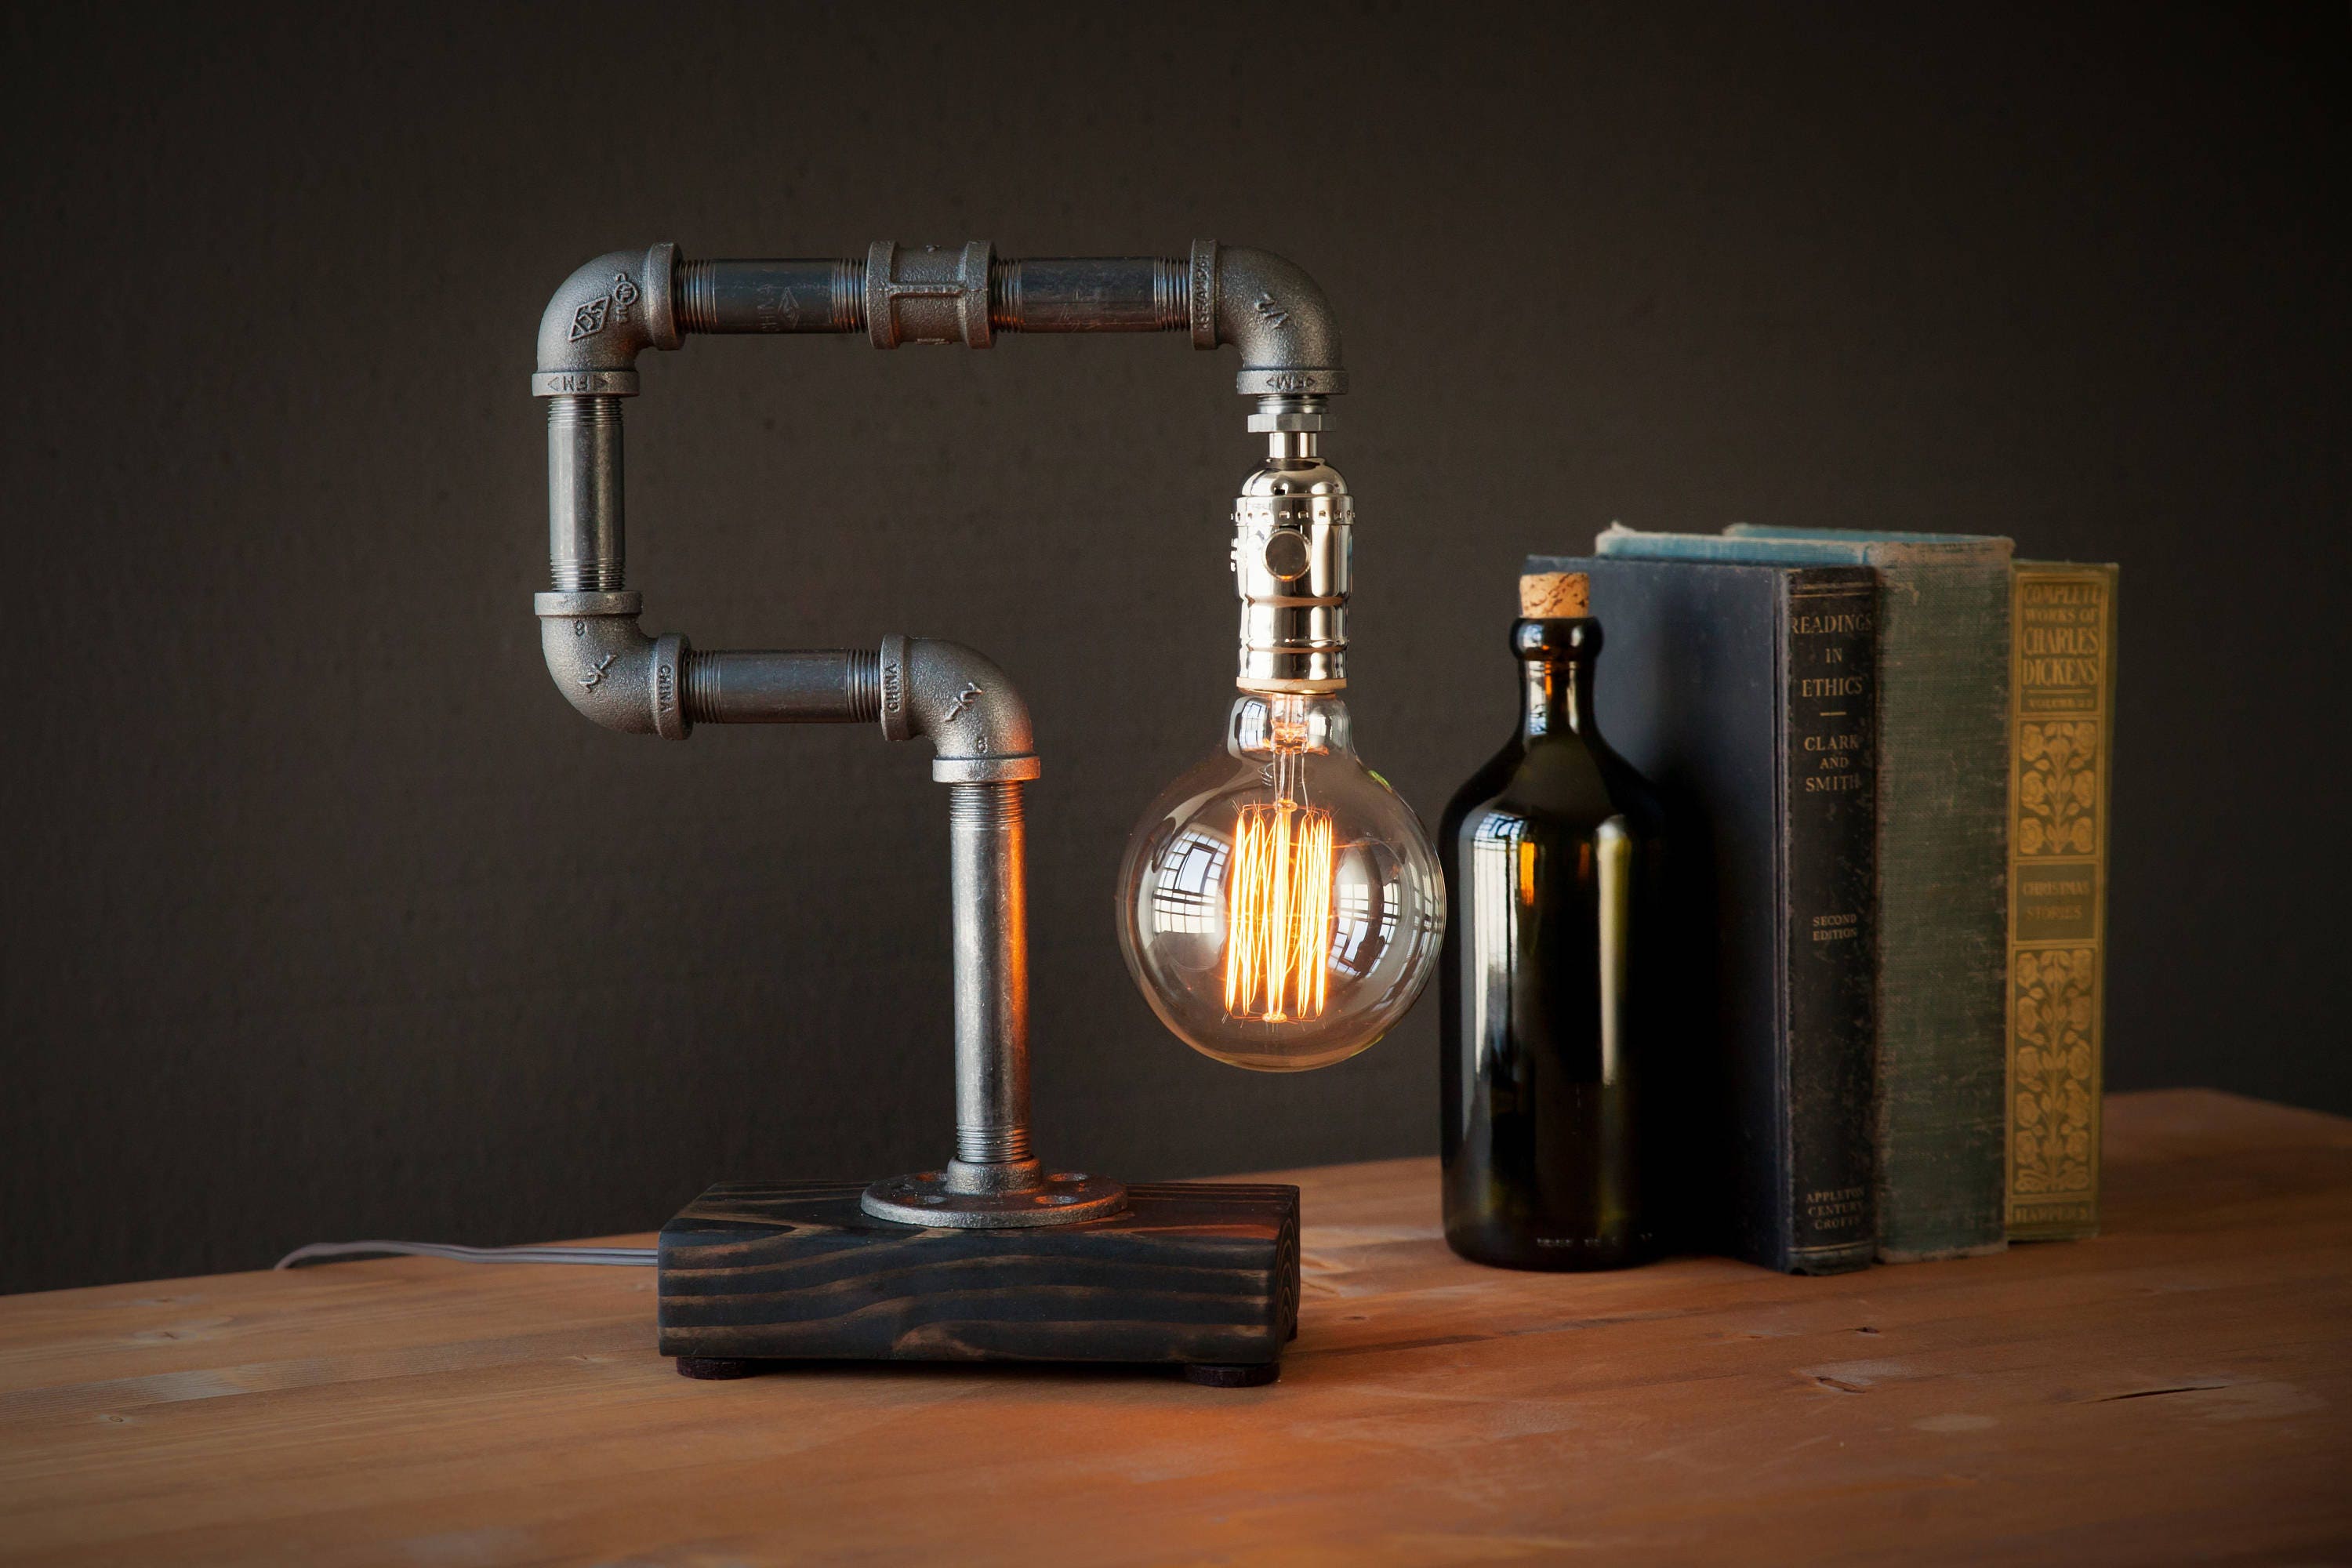 Dutch Boy & Signage on Building - Table Lamp,Steampunk lamp,Rustic dec –  JMan Photography